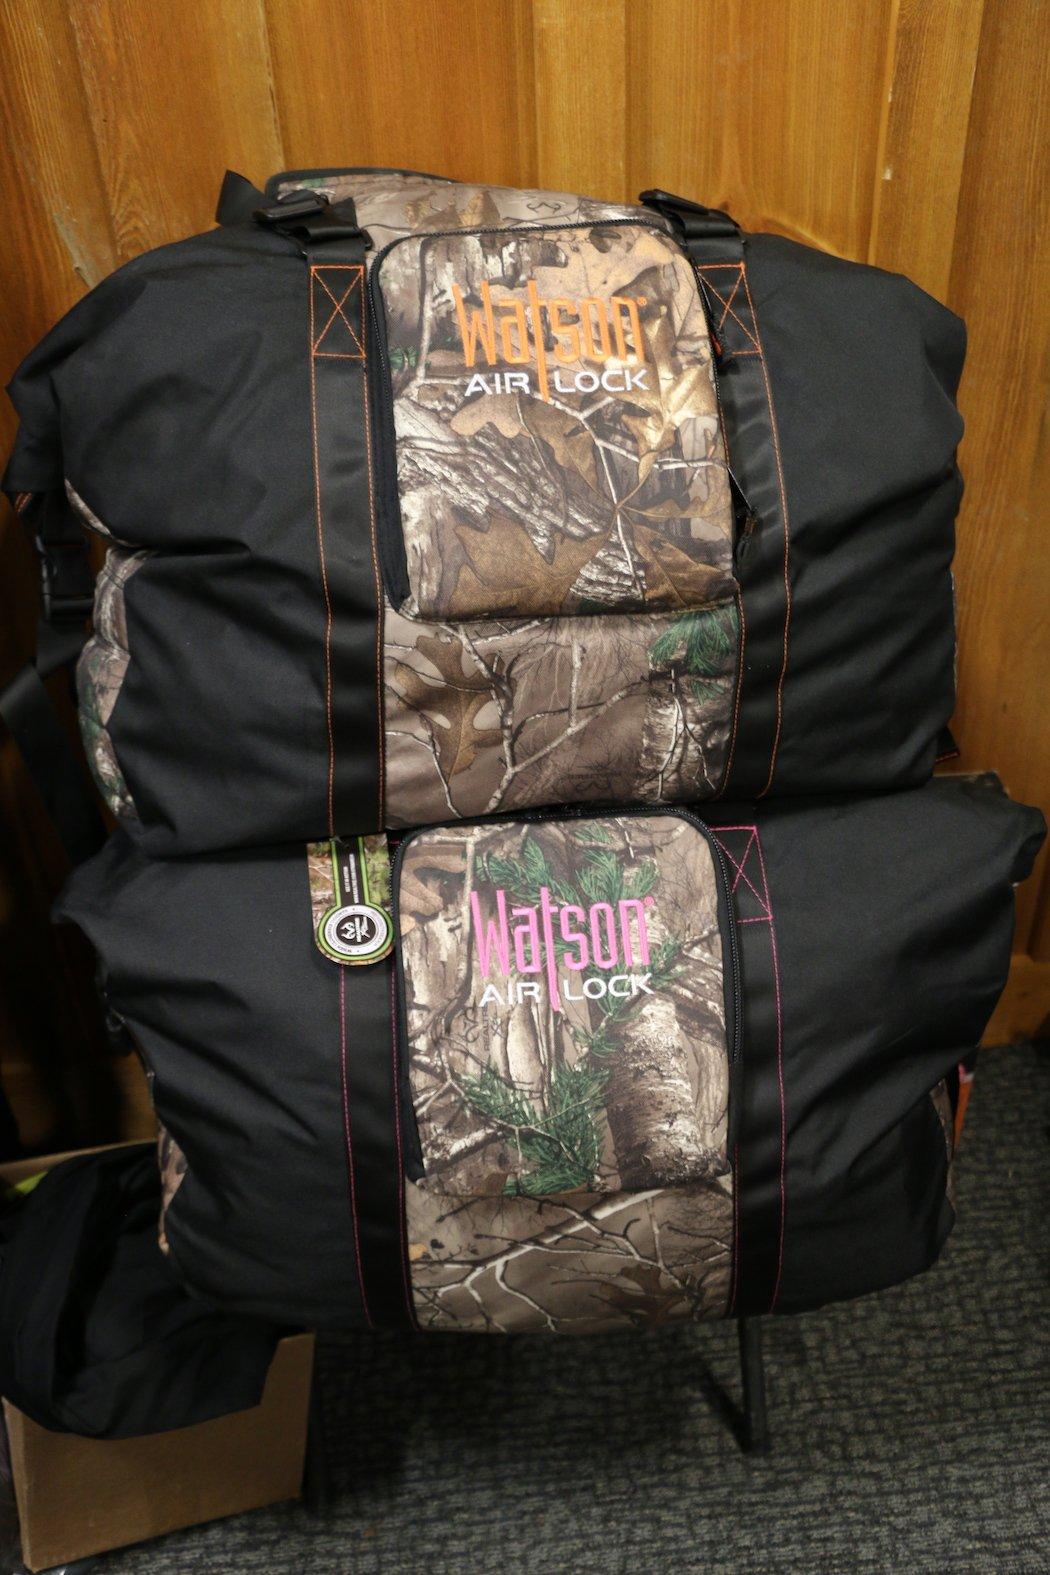 Watson Airlock Bags